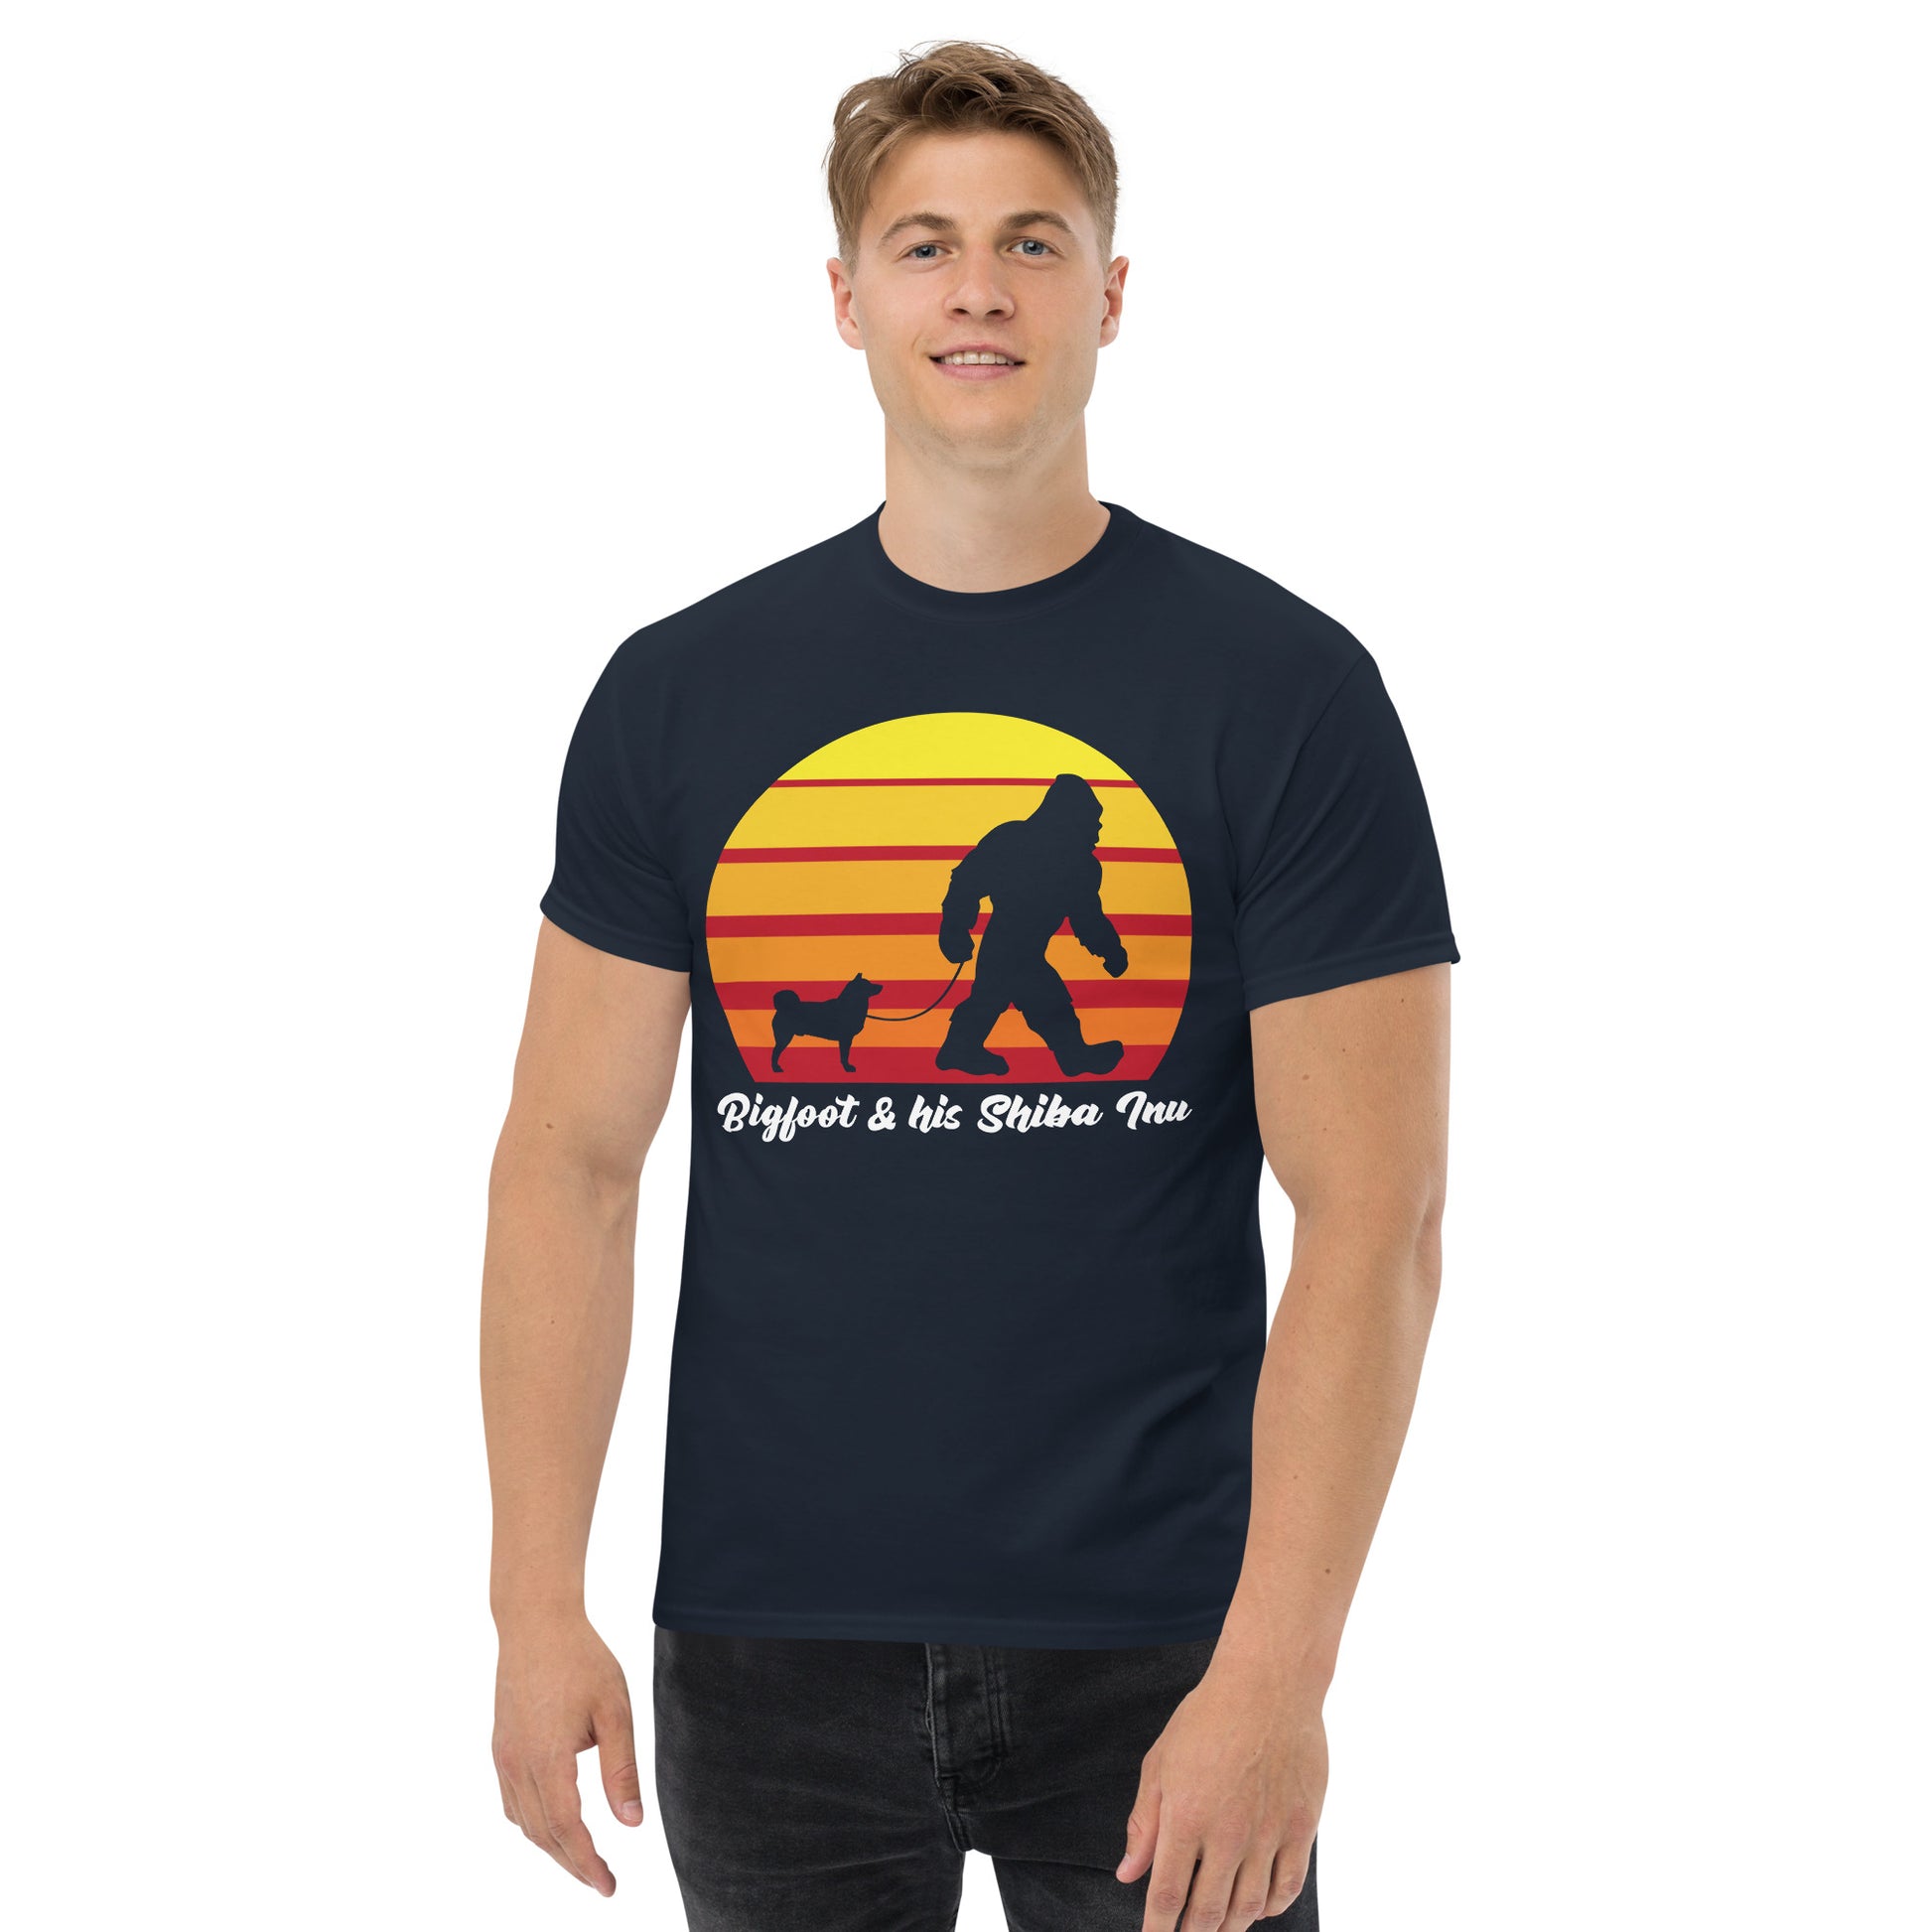 Bigfoot and his Shiba Inu men’s navy t-shirt by Dog Artistry.